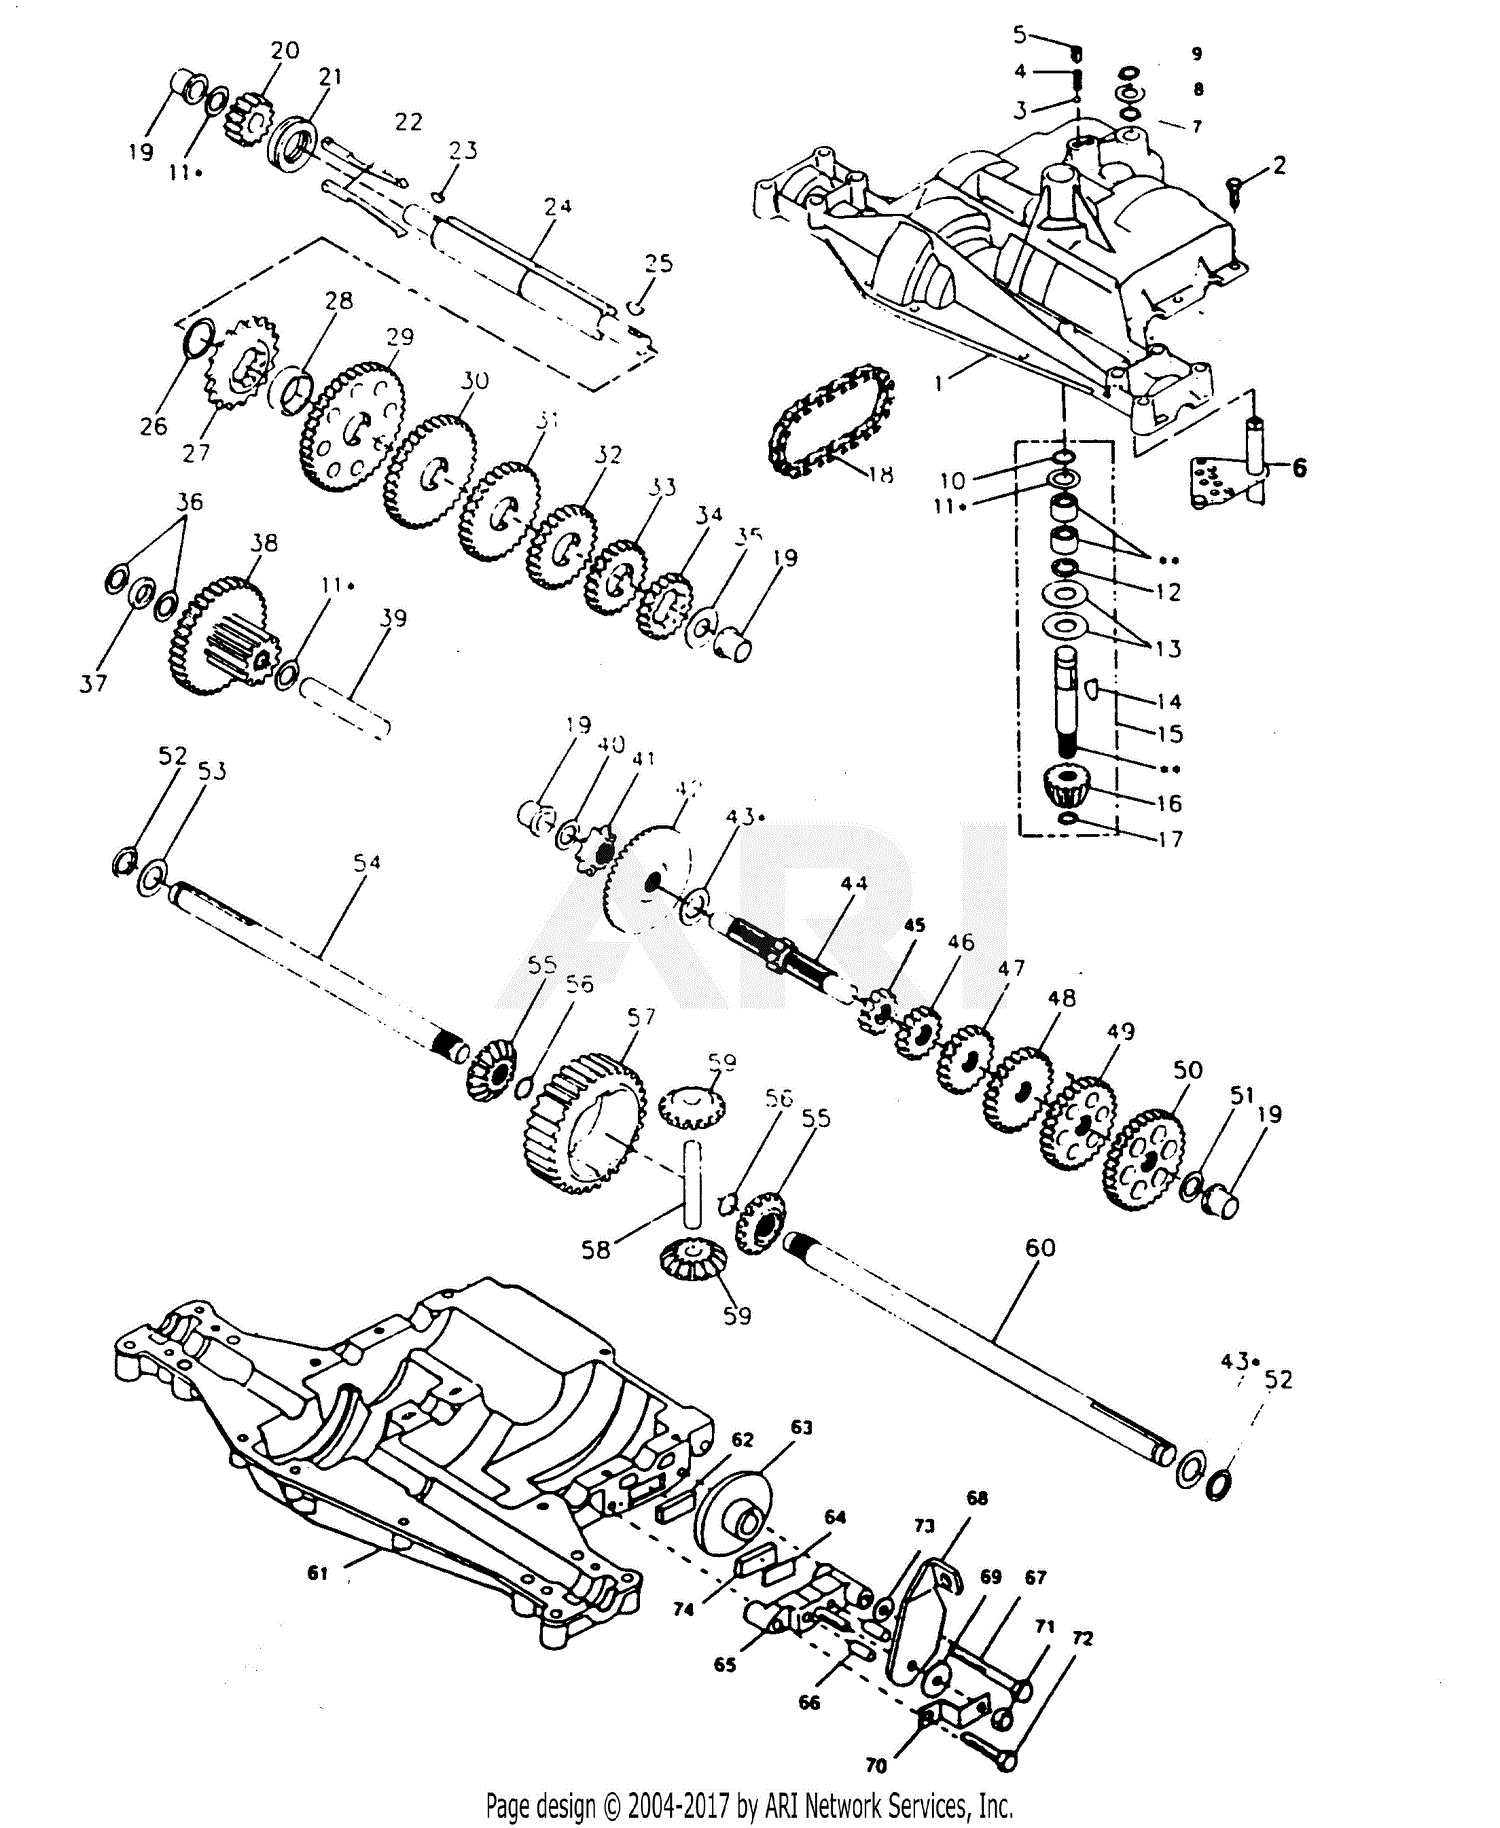 24 Dana 60 Parts Diagram - Wiring Diagram Niche